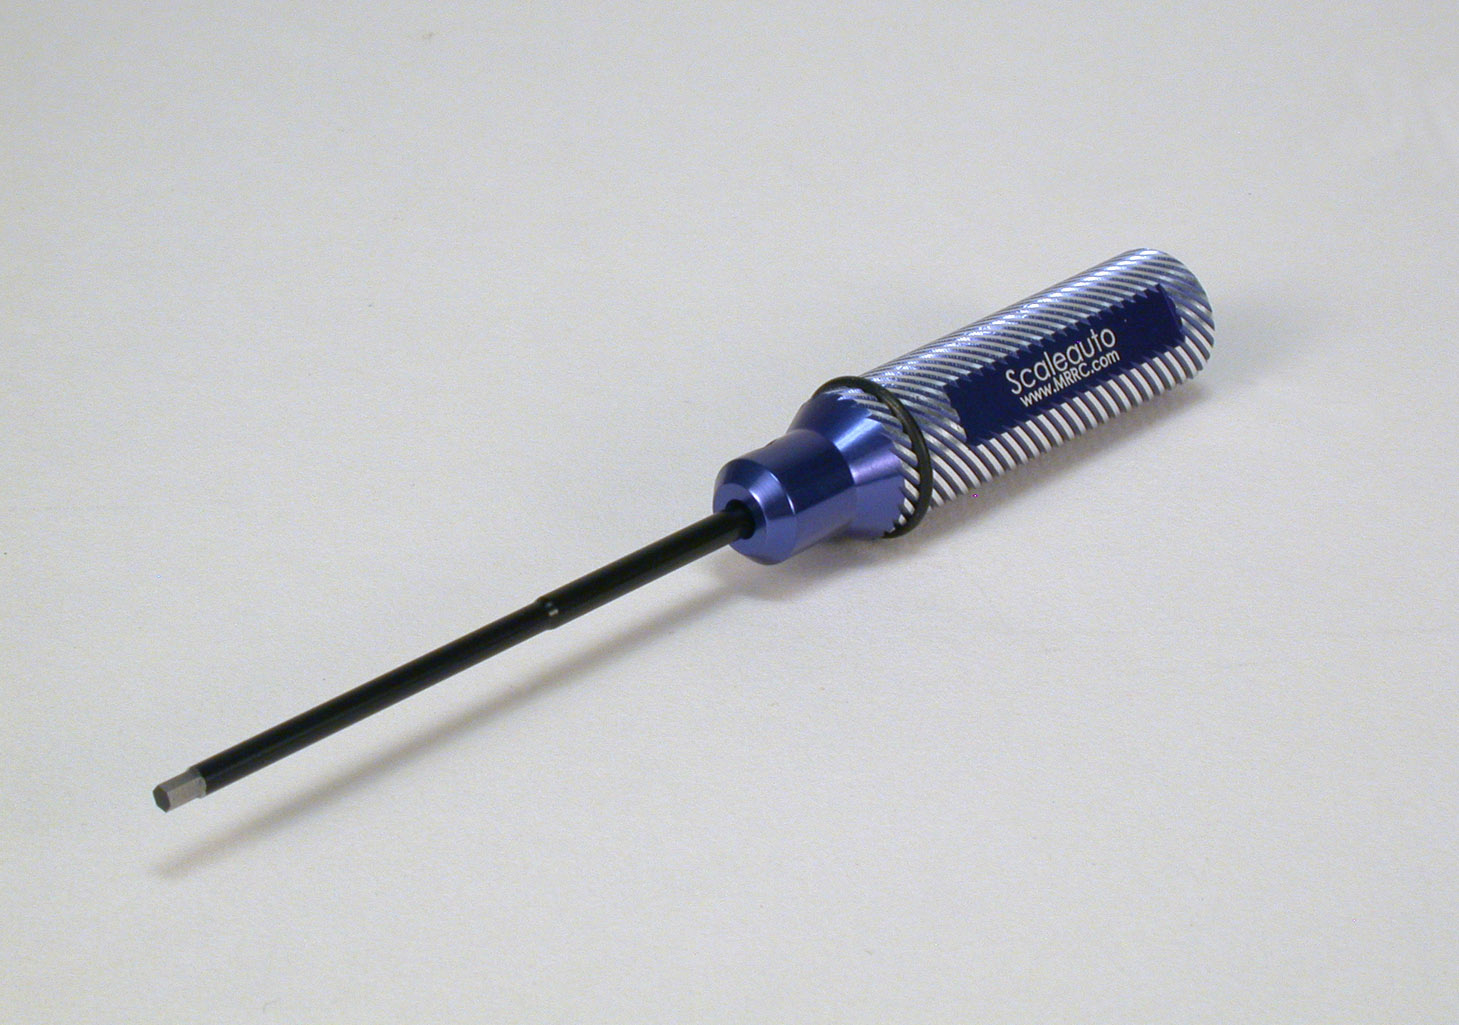 SC-5032 ProTool Allen 2mm with blue aluminum handle